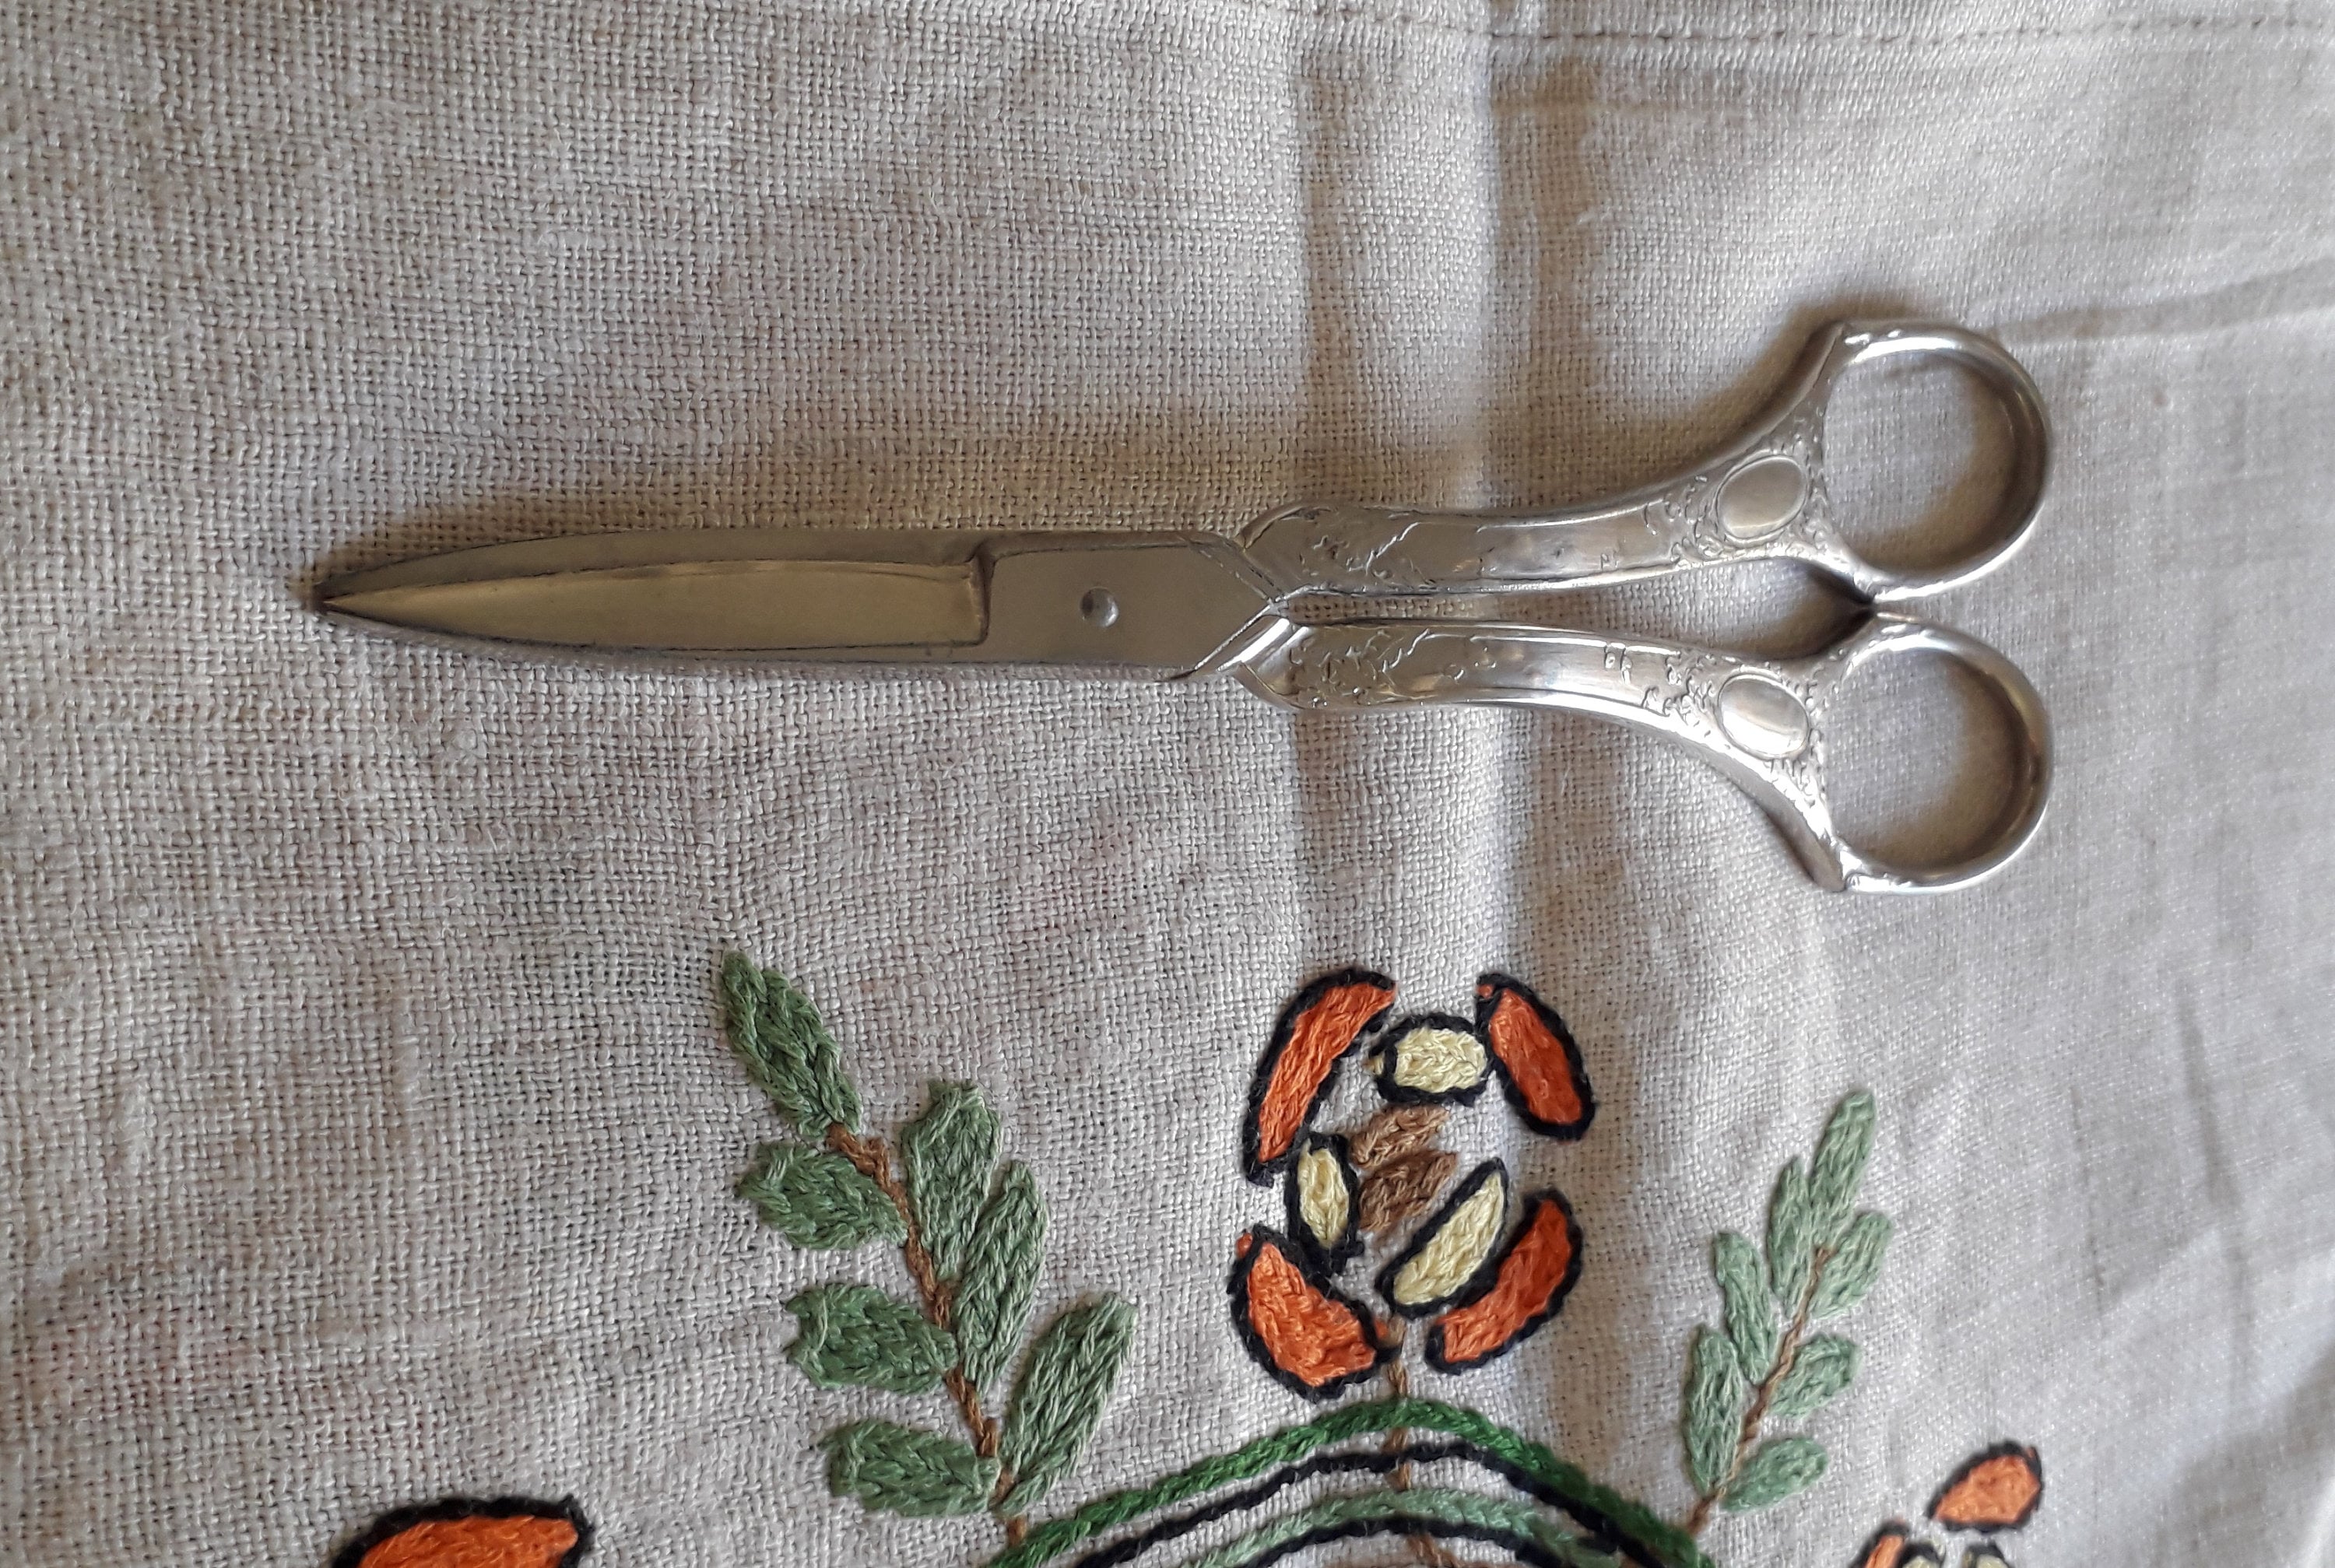 Gingher 220530 - 8 inch Left Hand Knife Edge Dressmakers Shears —